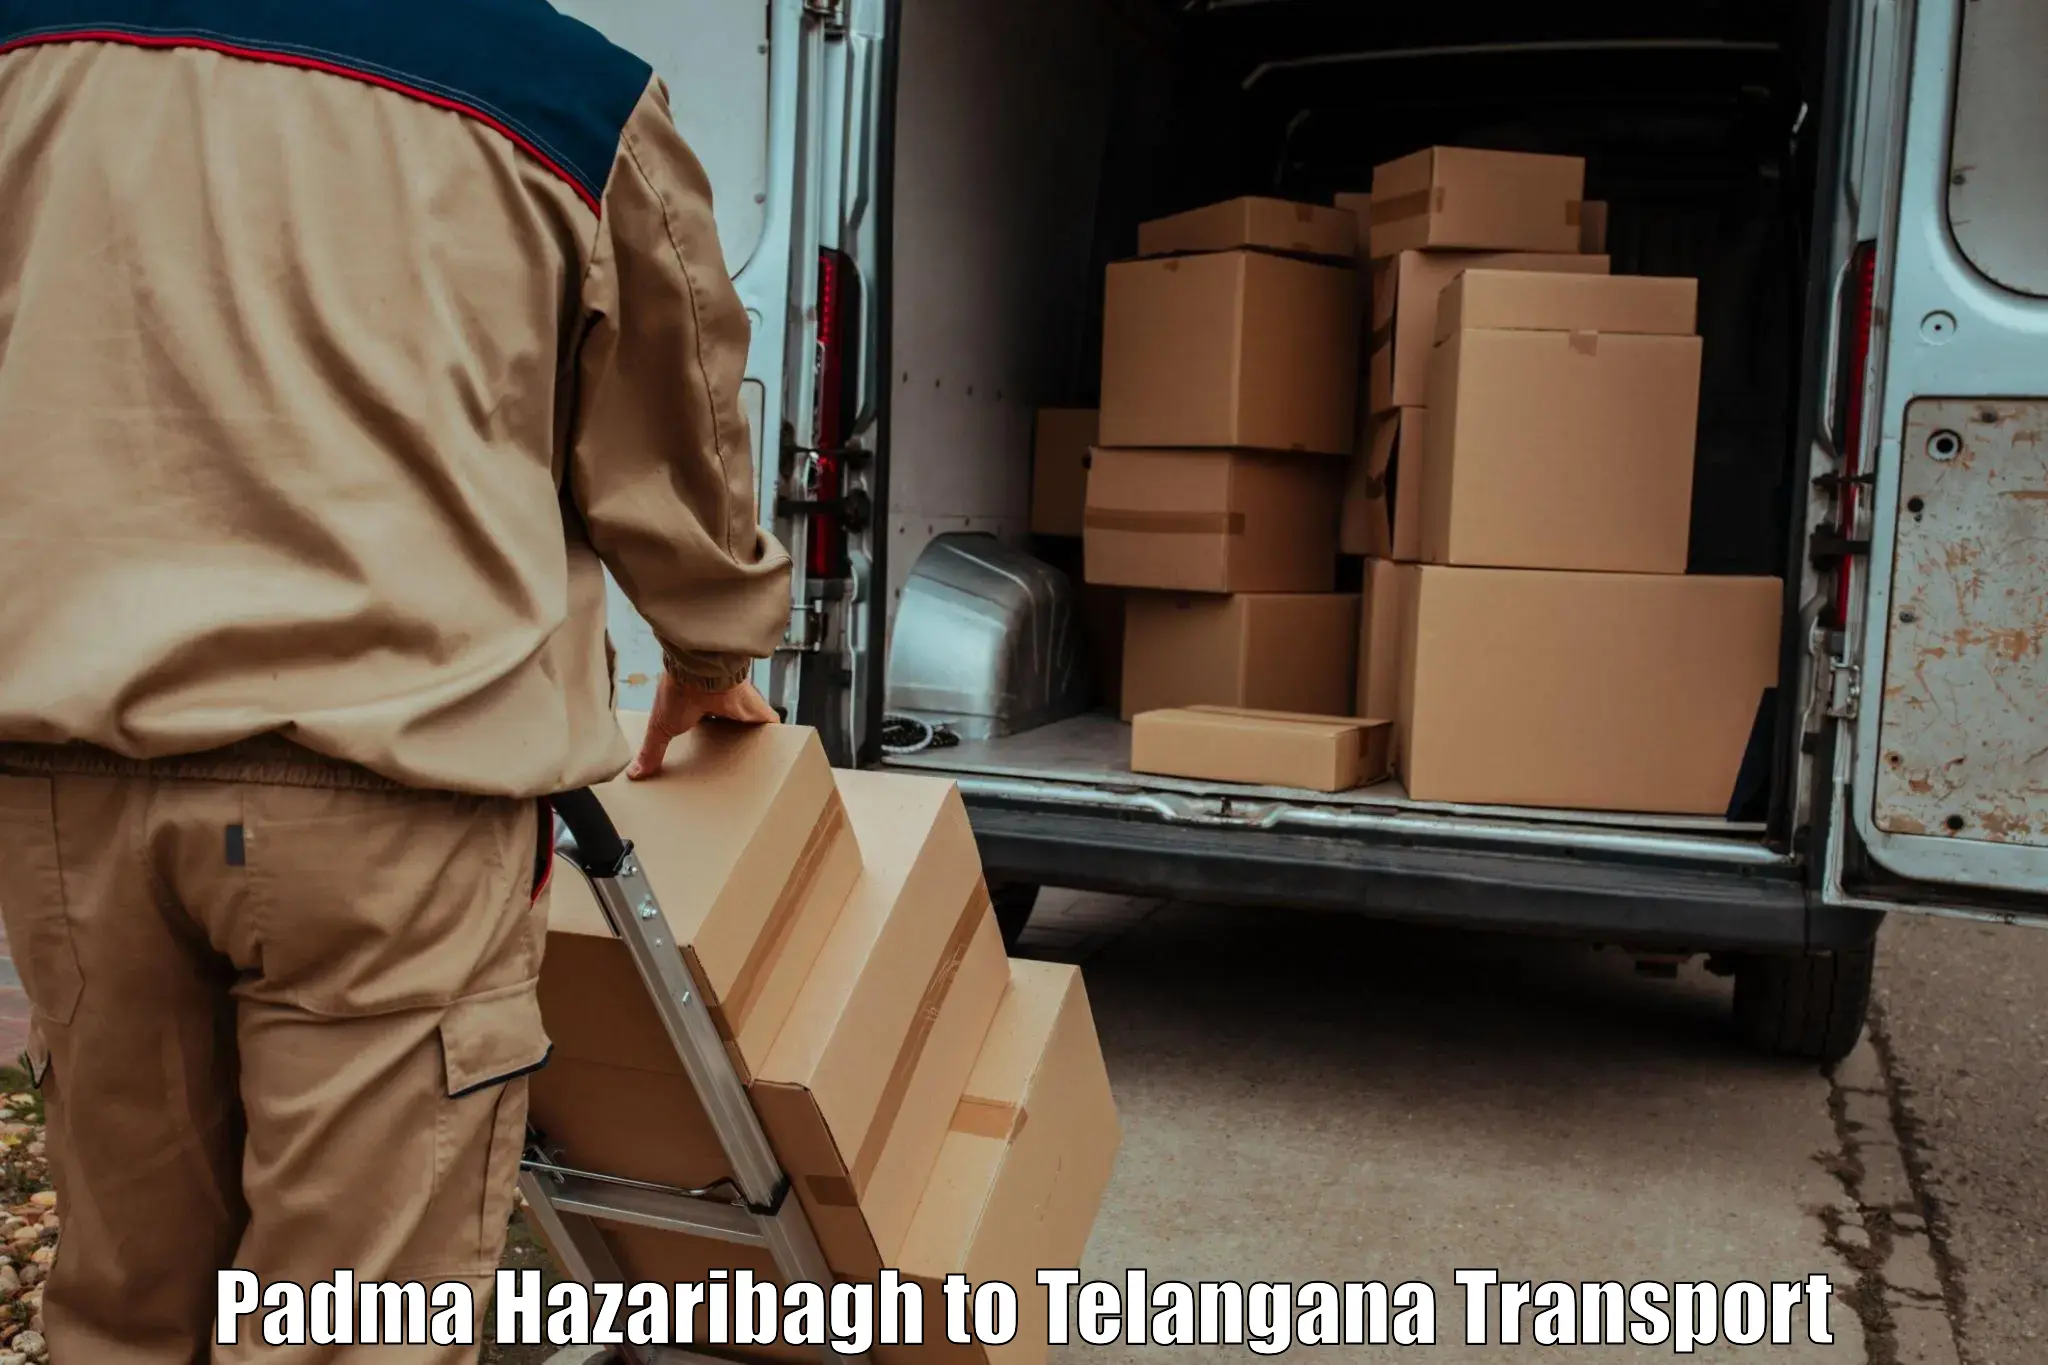 Transport shared services Padma Hazaribagh to Dubbak